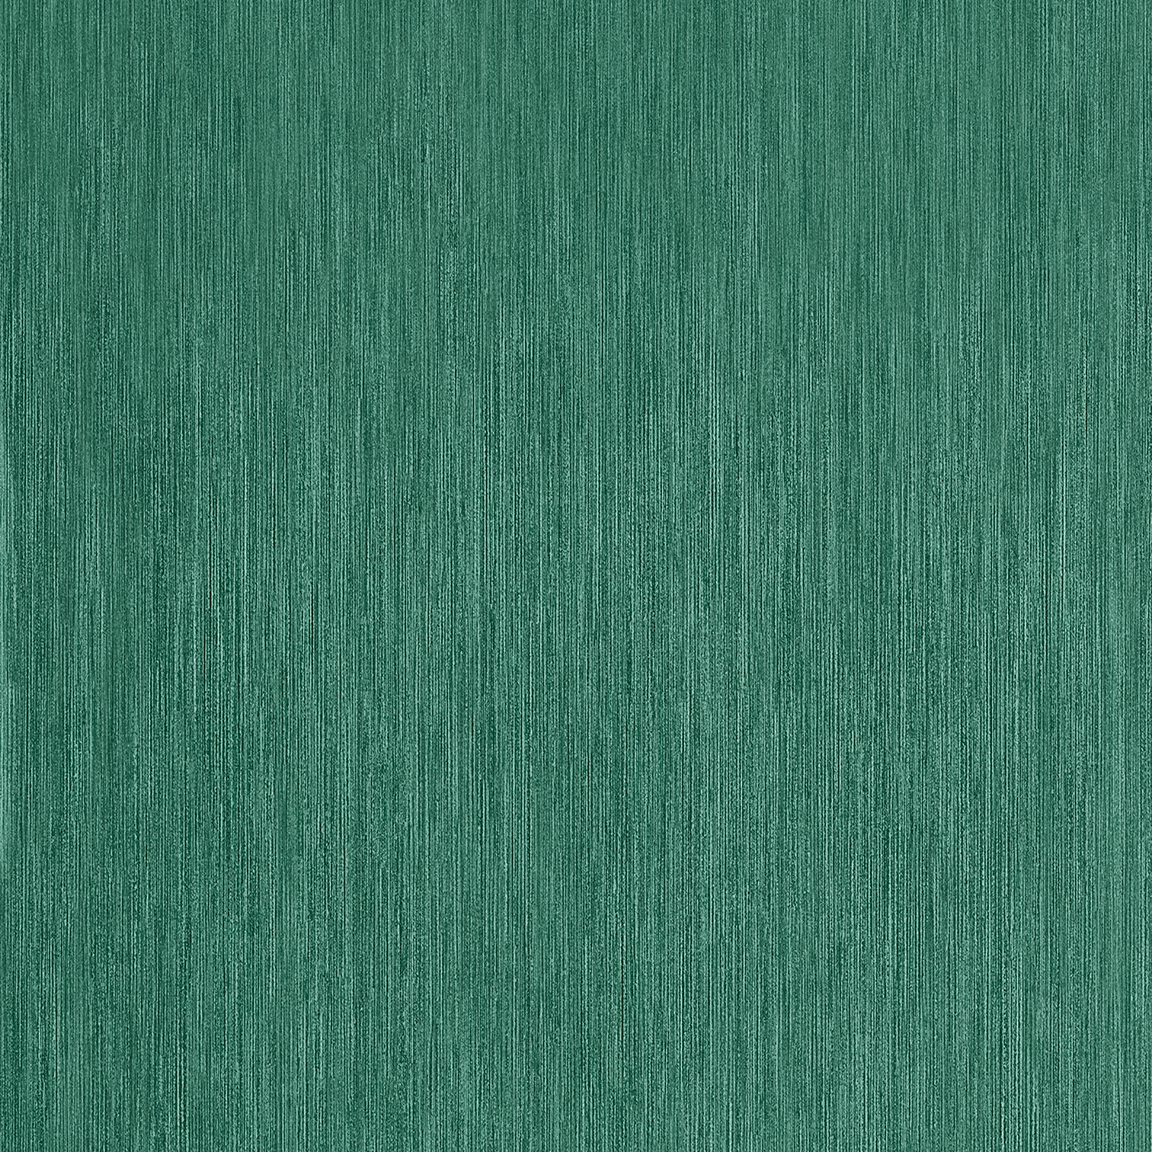 Canopy Green tile